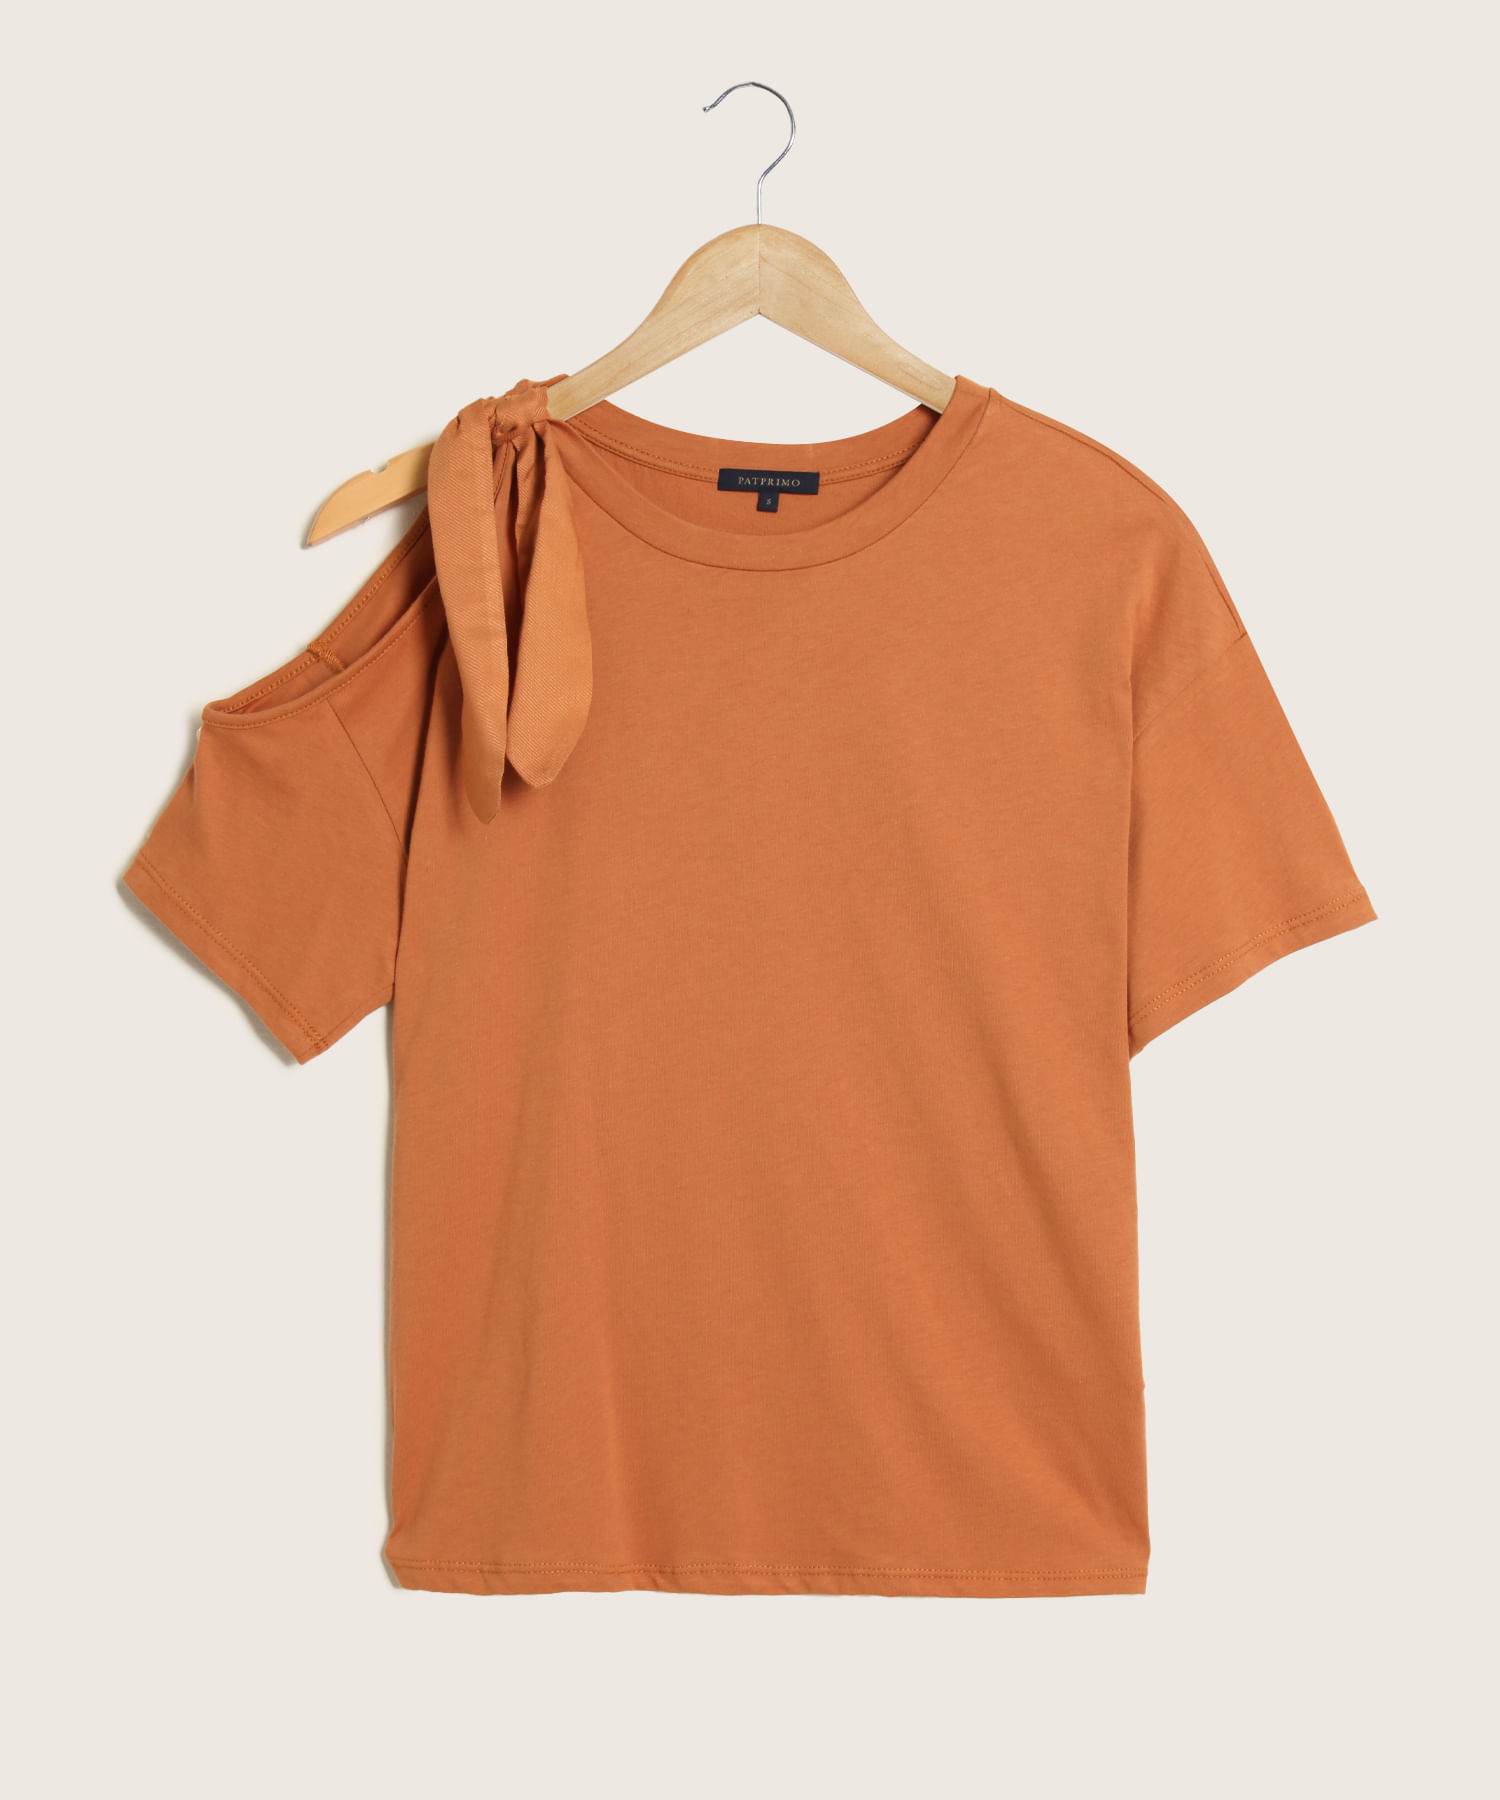 Camisetas Magliano - Camiseta - Color Carne Y Neutral - Q5801062704